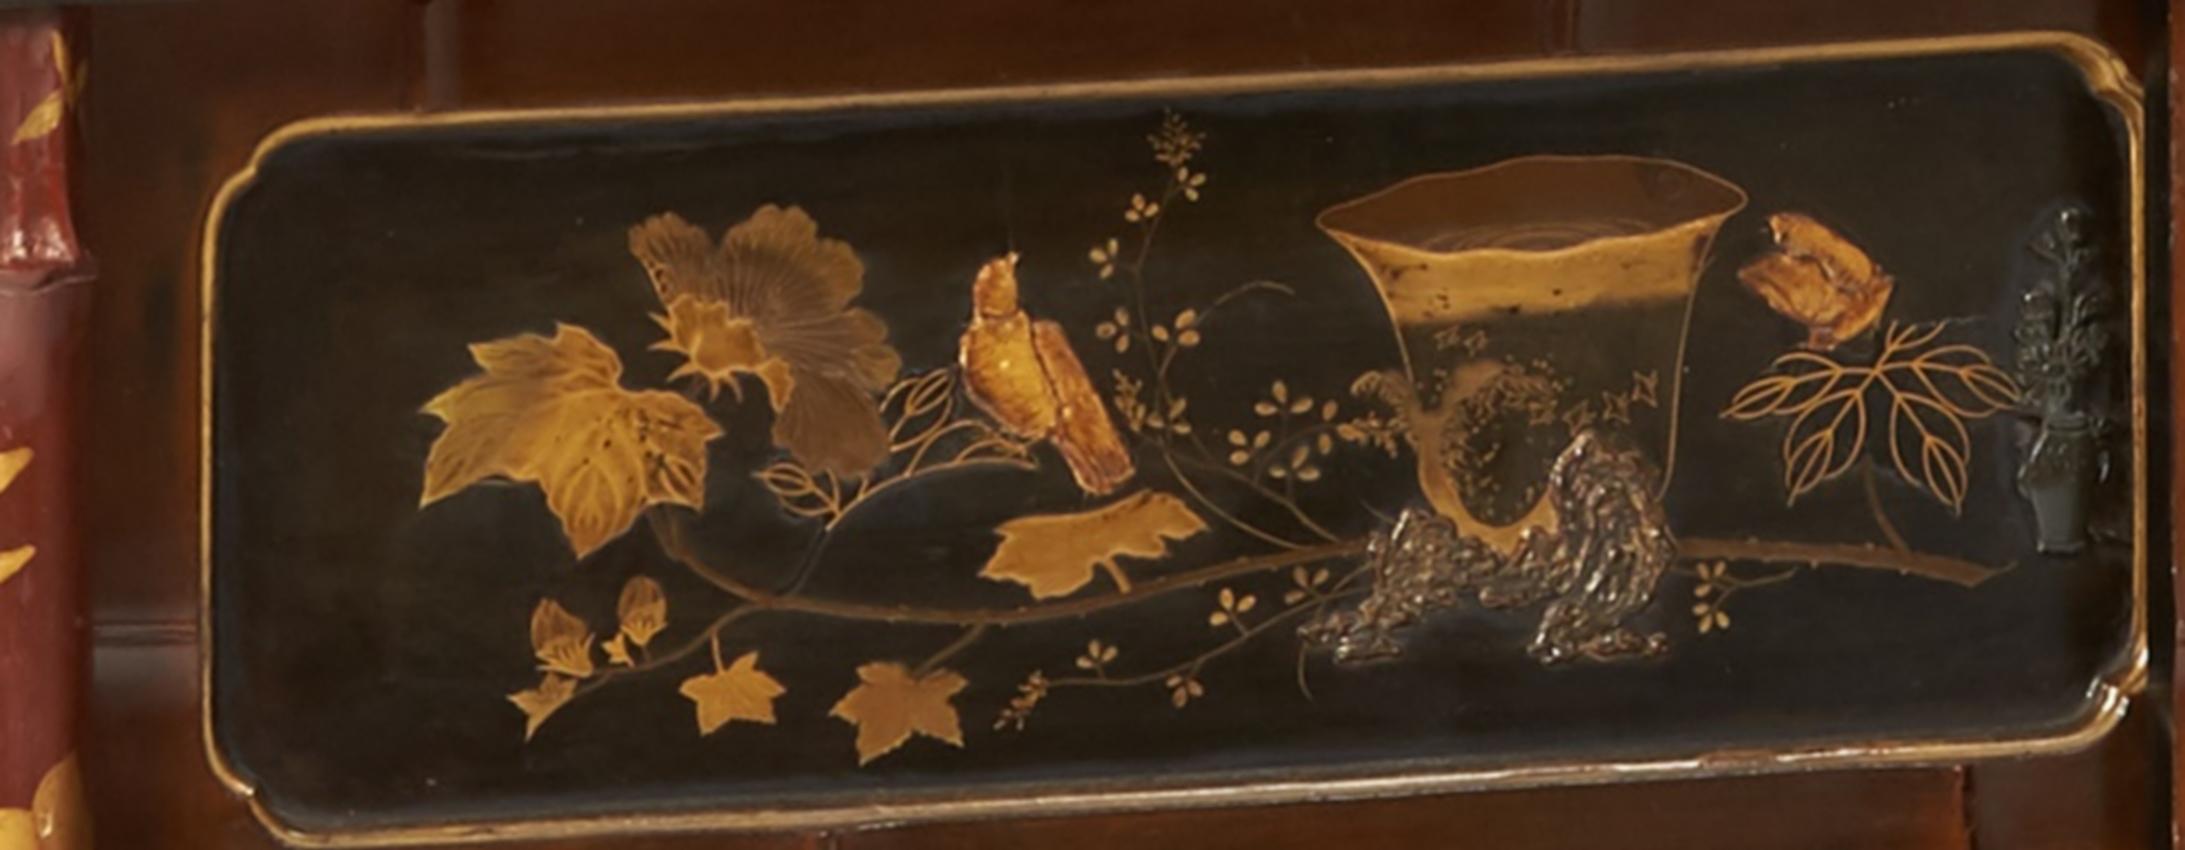 19th Century Japanese Shibayama Cabinet For Sale 1